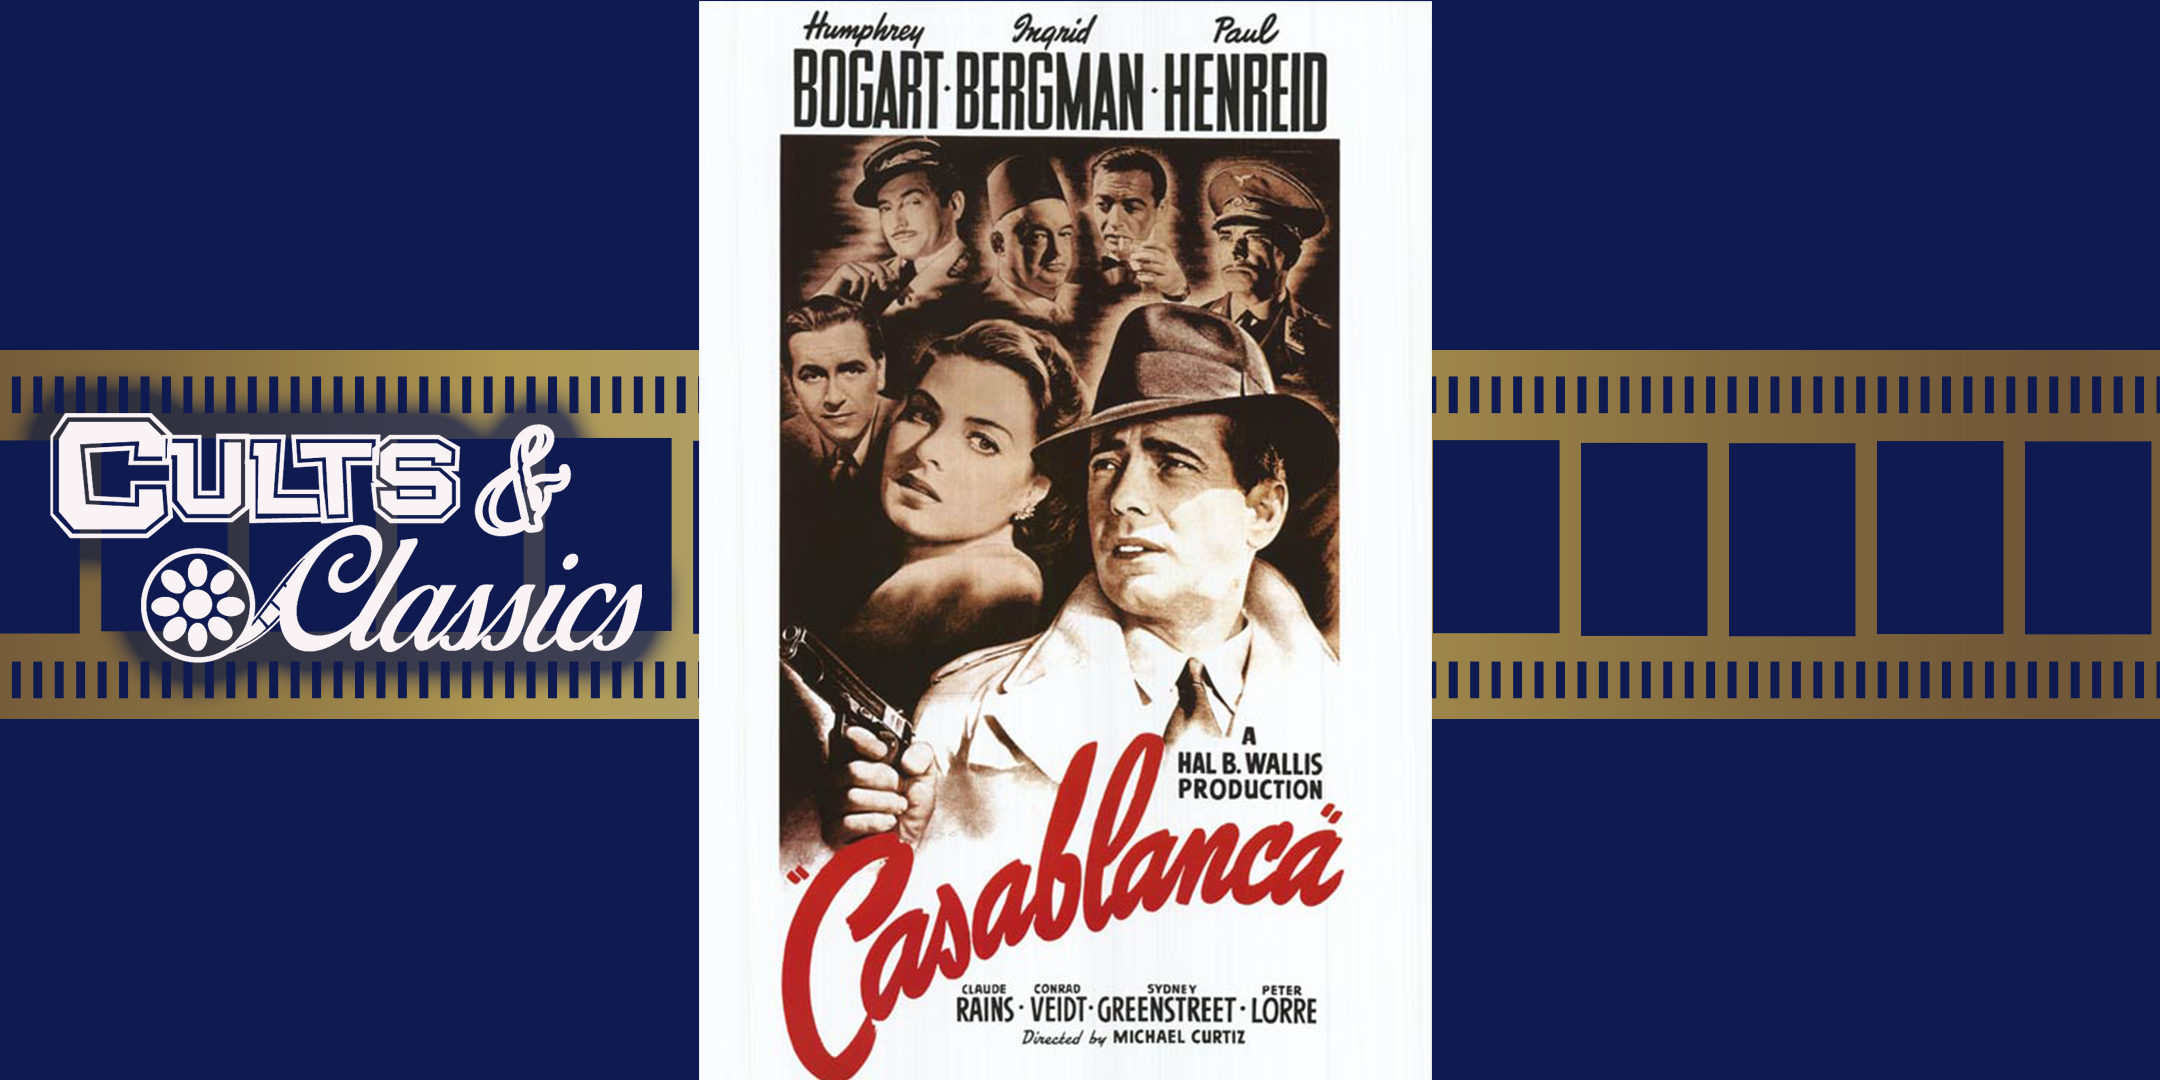 ** CANCELED ** “Casablanca”